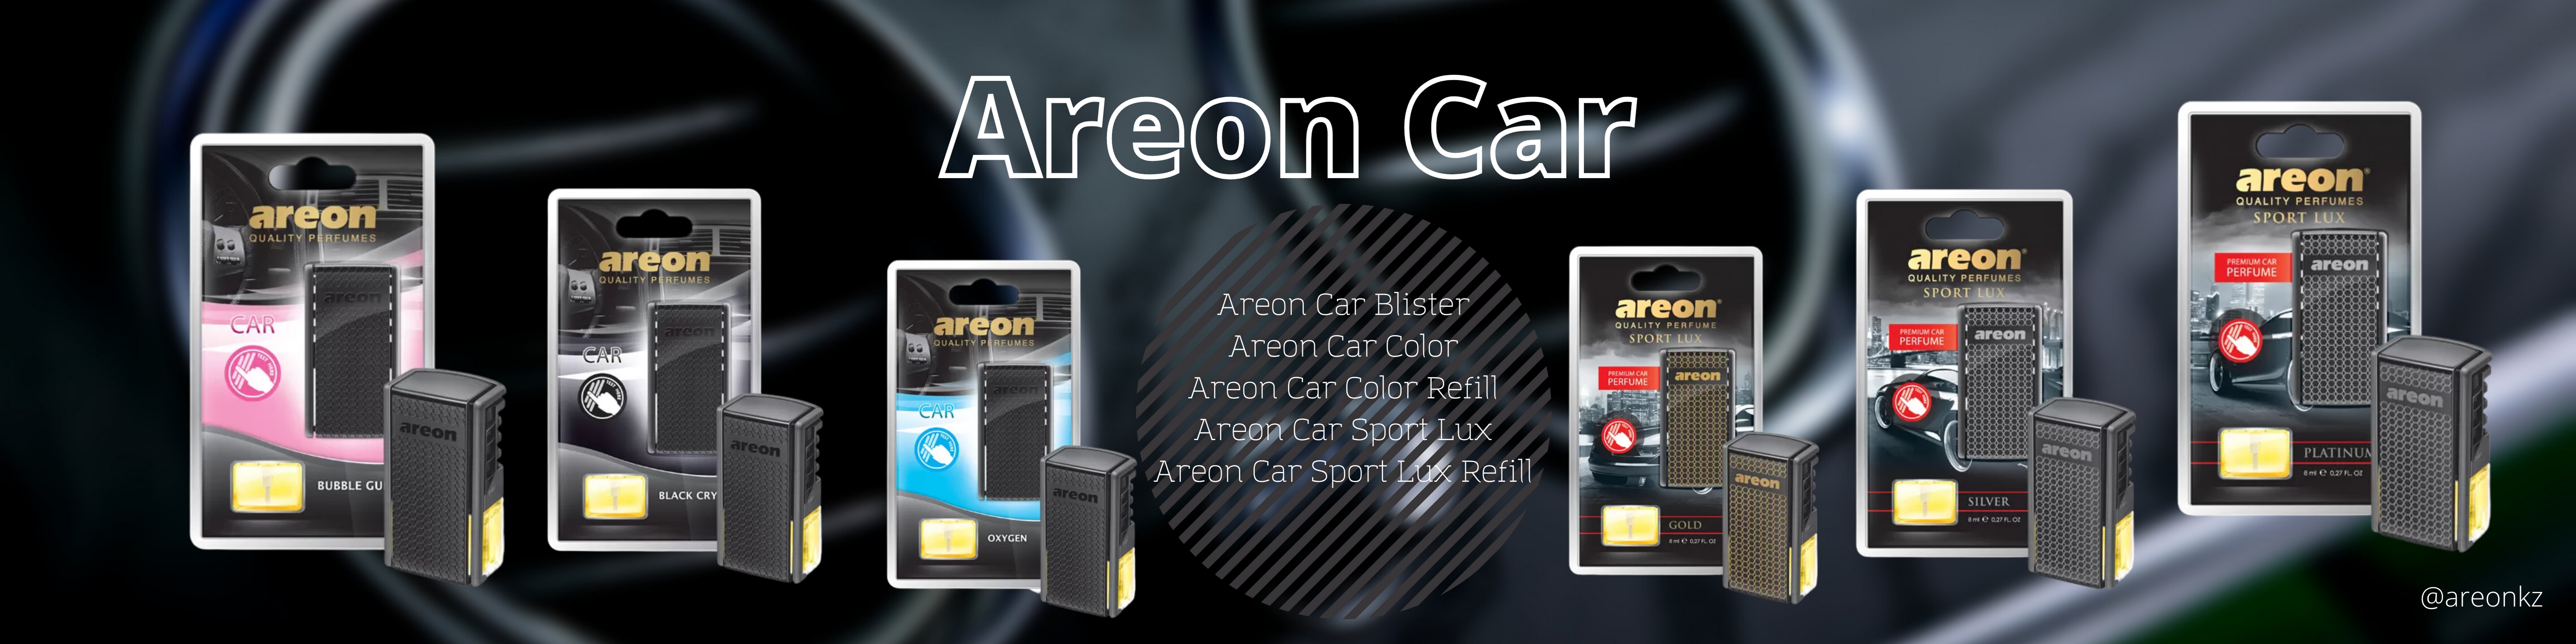 Areon Car